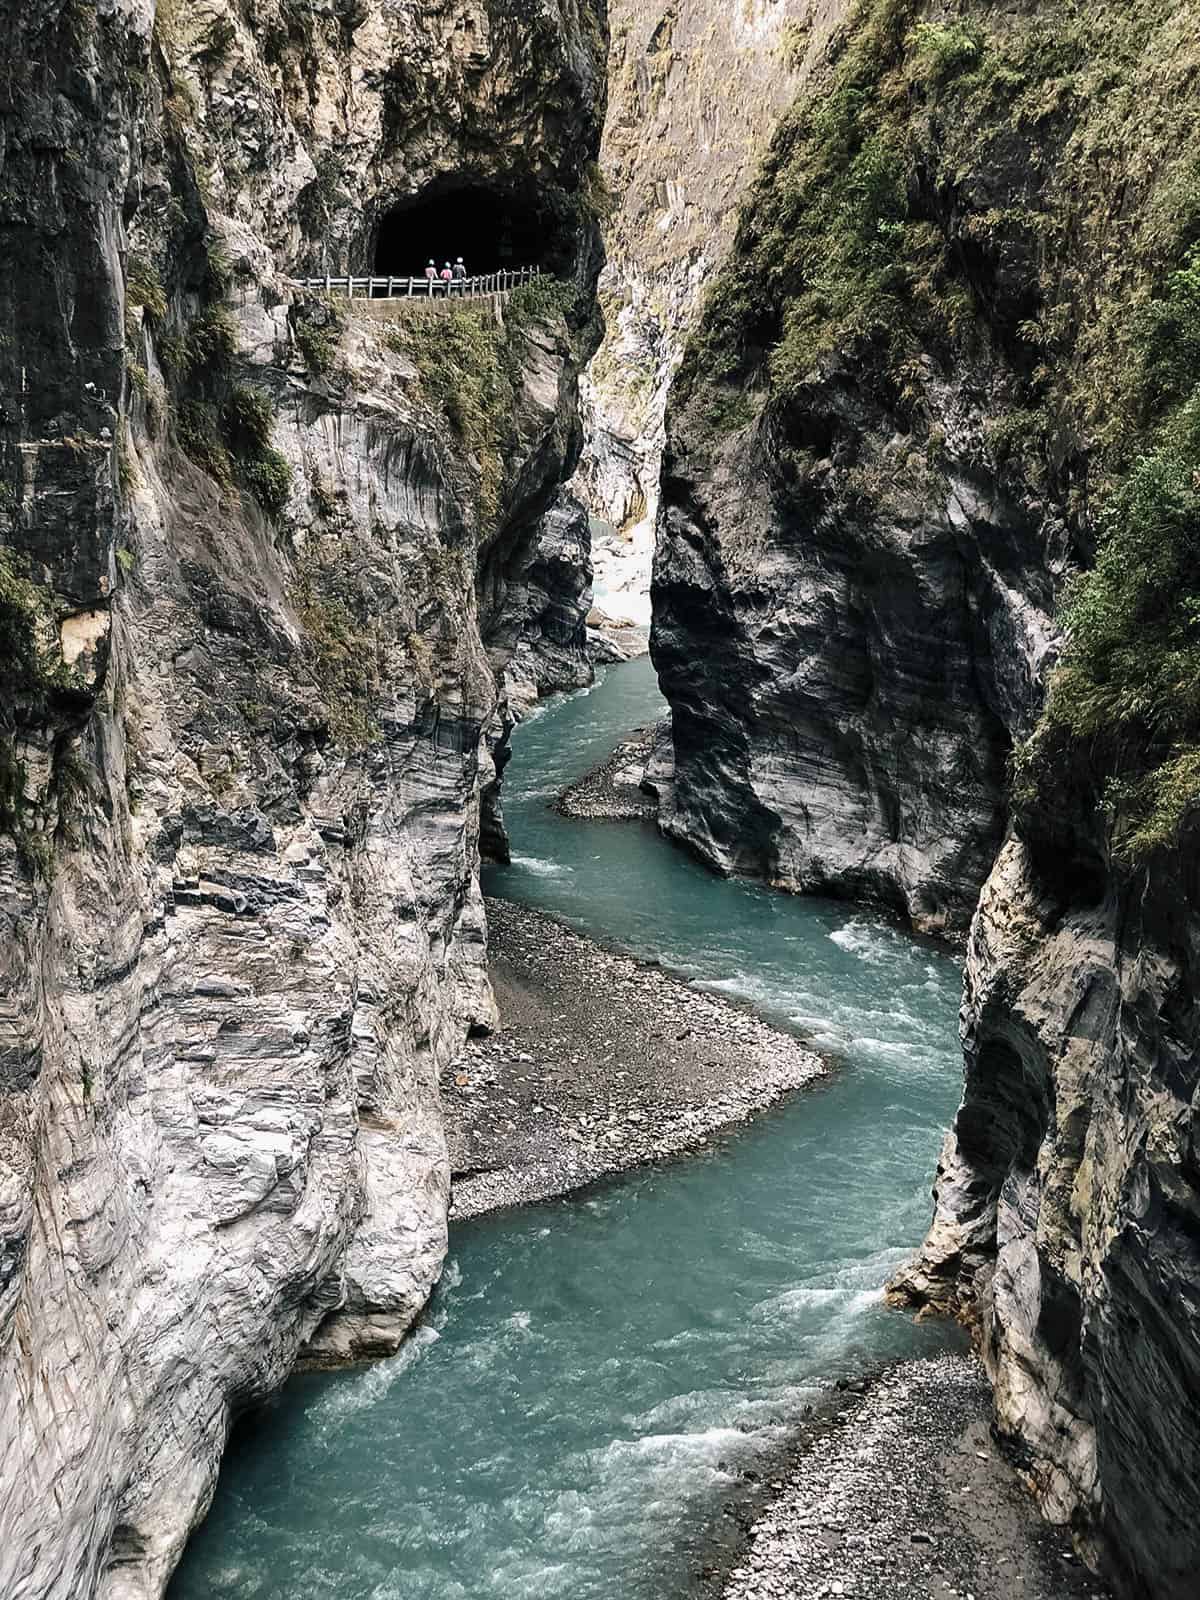 Meandering river at Taroko Gorge in Hualien, Taiwan